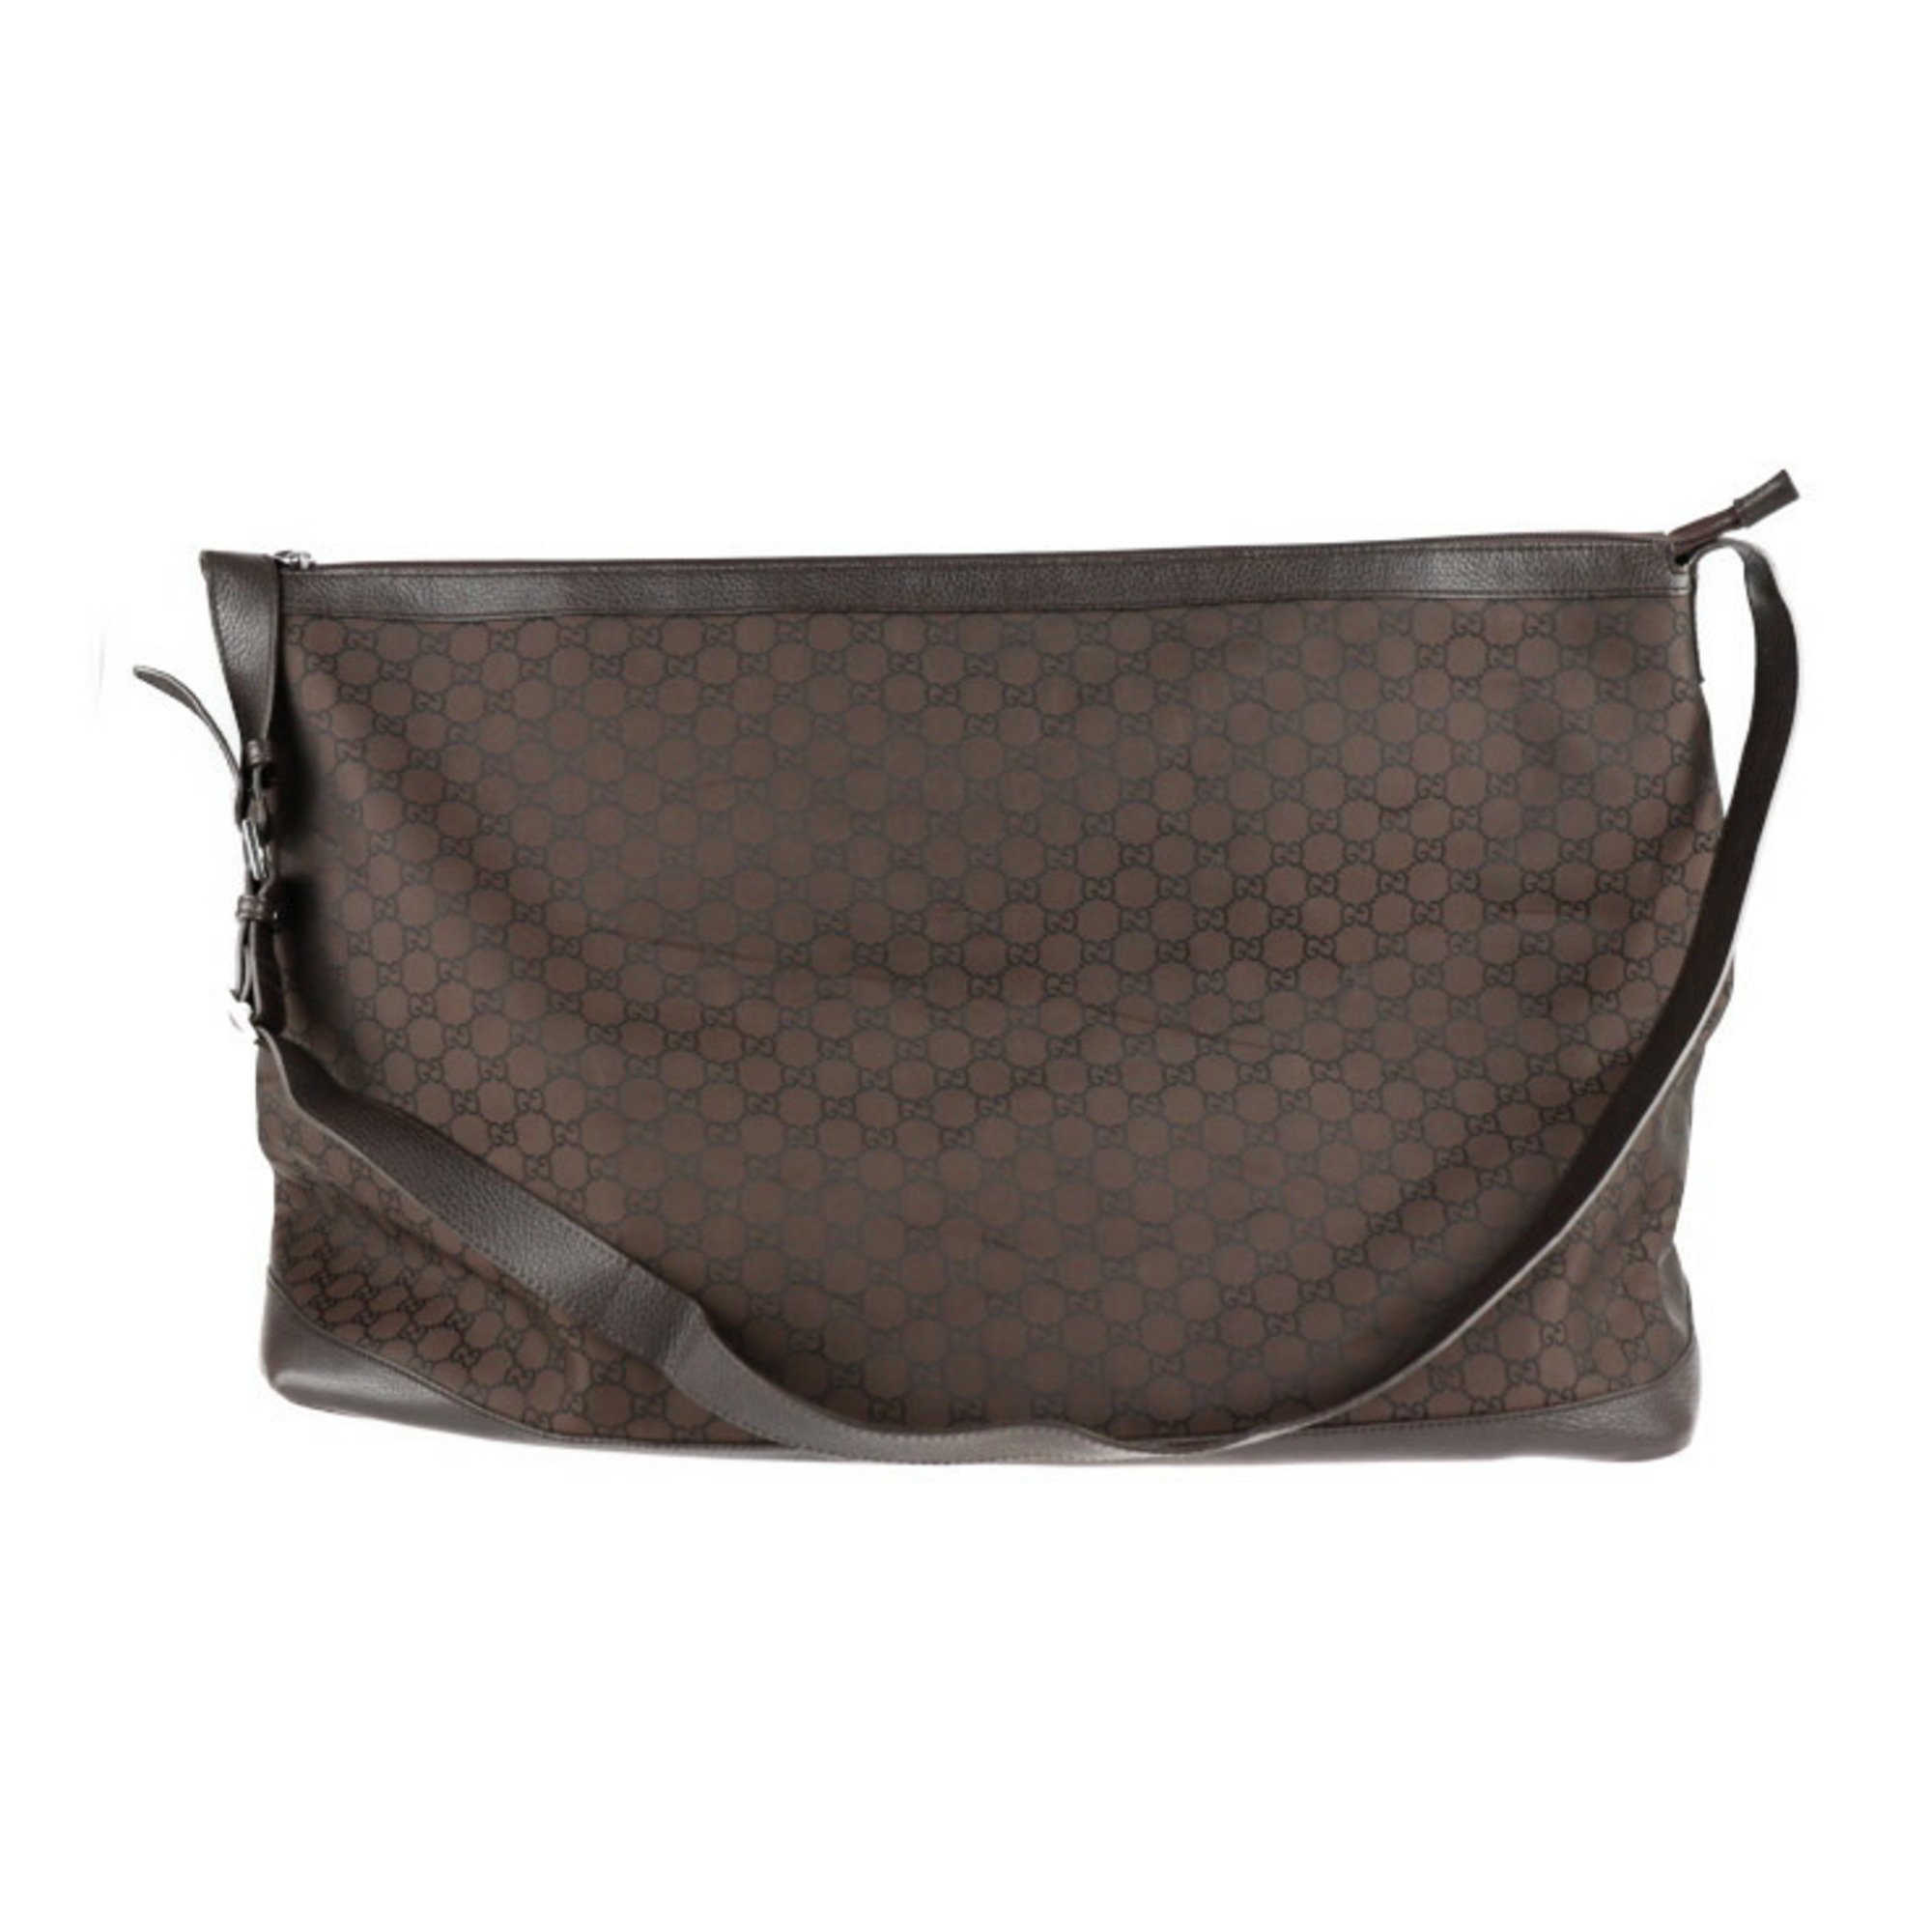 GUCCI Gucci Boston Bag 105669 GG Nylon Leather Brown Shoulder Travel